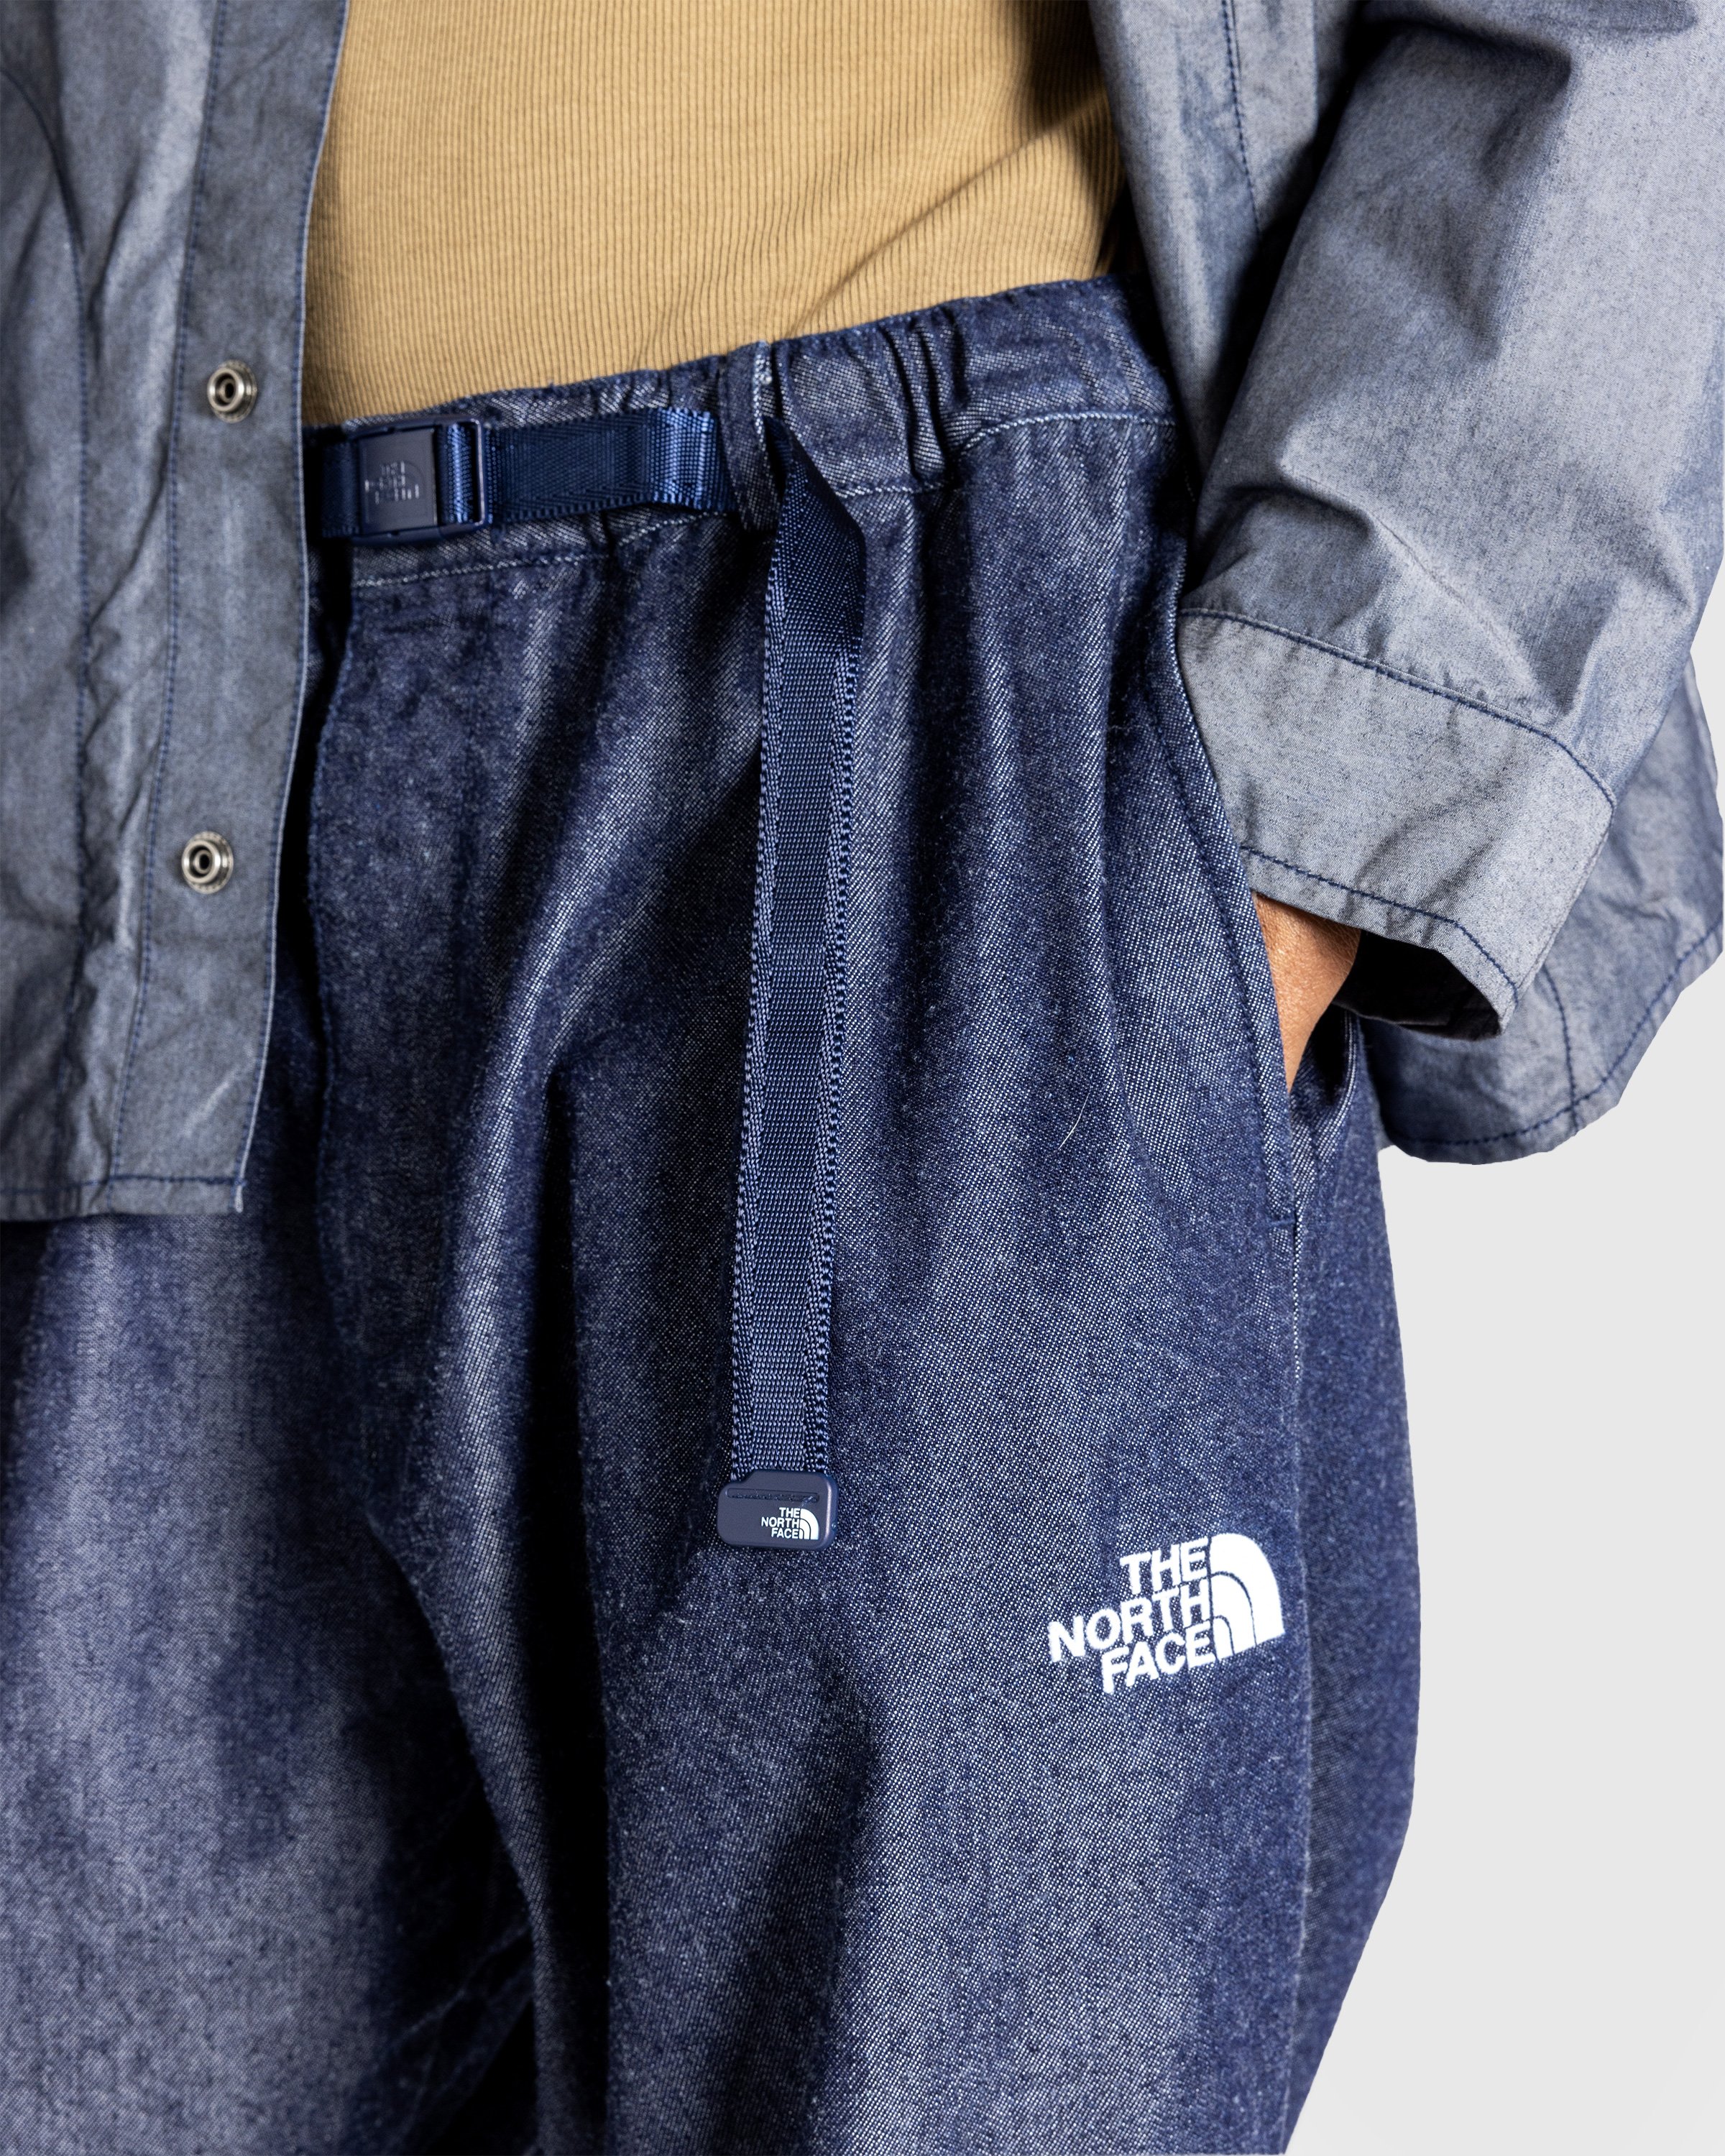 The North Face - M DENIM CASUAL PANTS - AP LIGHT INDIGO DENIM WASH - Clothing - Blue - Image 5